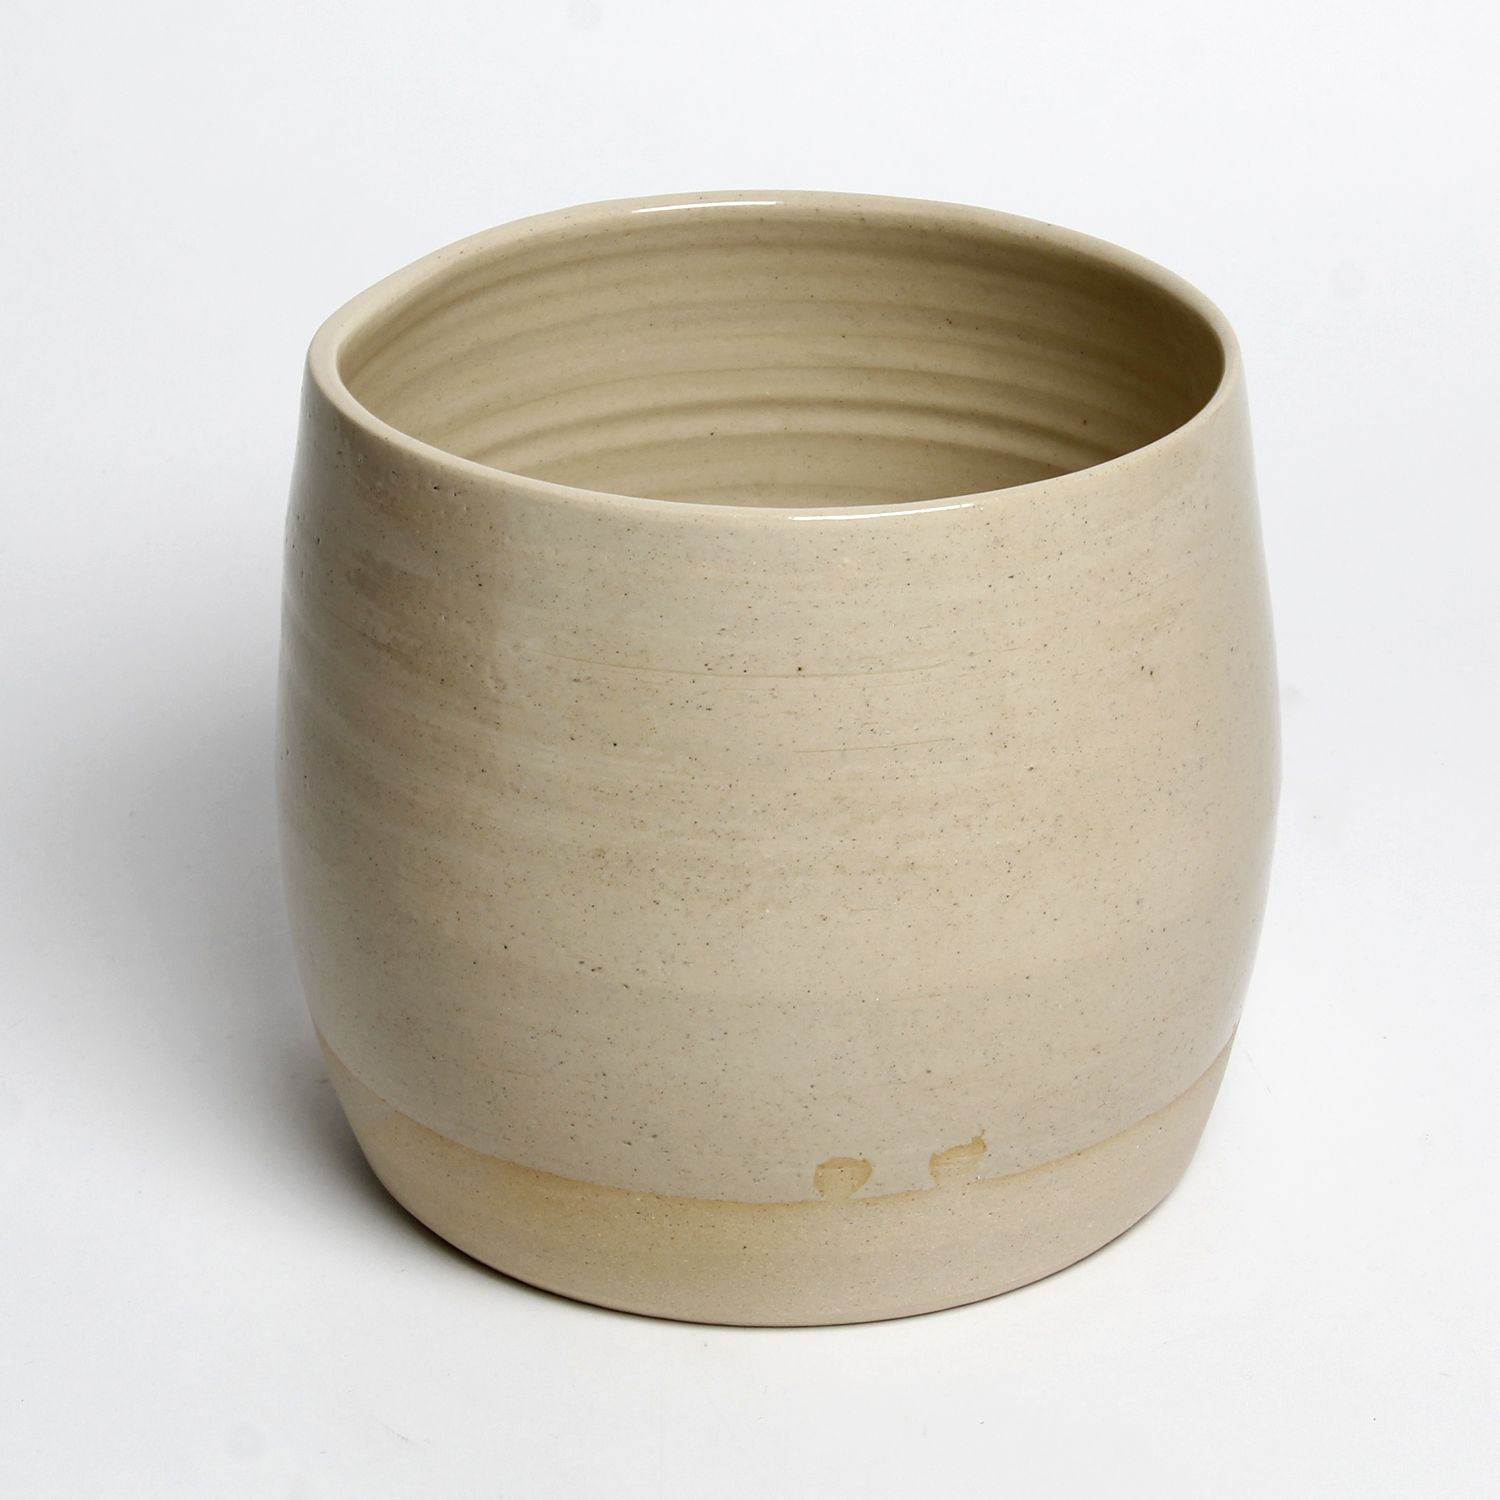 Suzanne Morrisette: Pebble Planter Vase Product Image 1 of 2